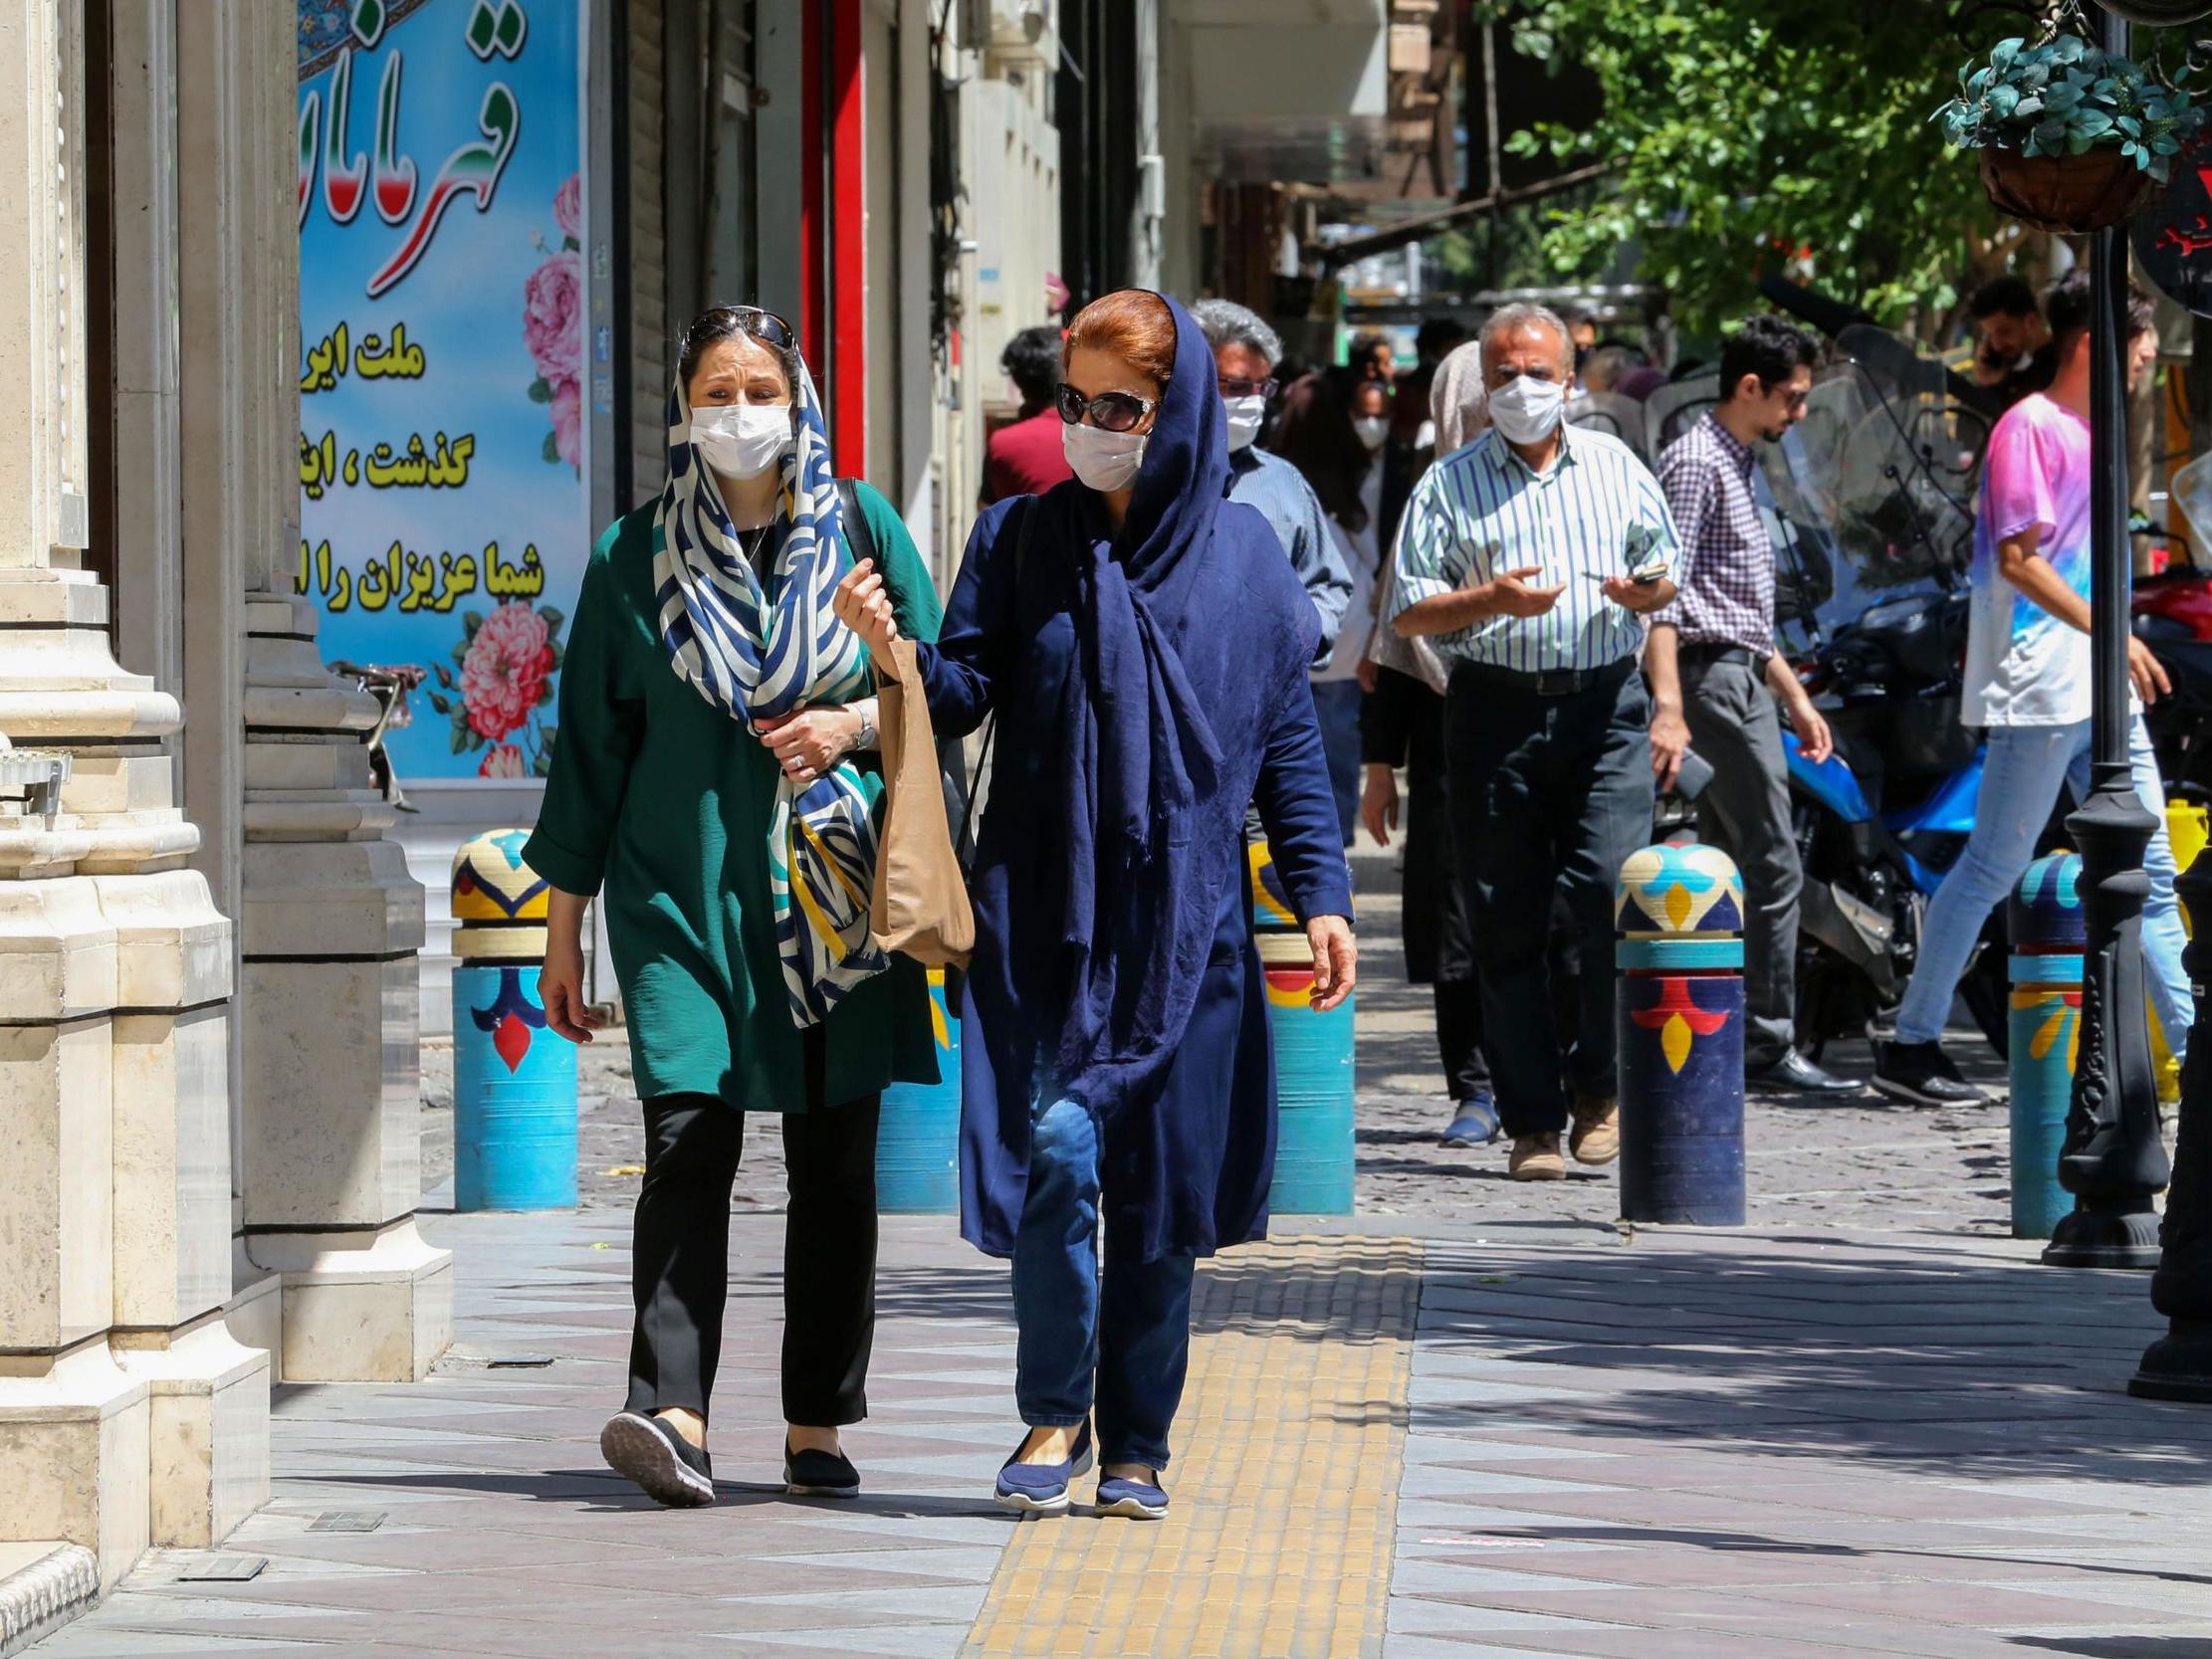 Iran's coronavirus outbreak has actually been among the worst in the region